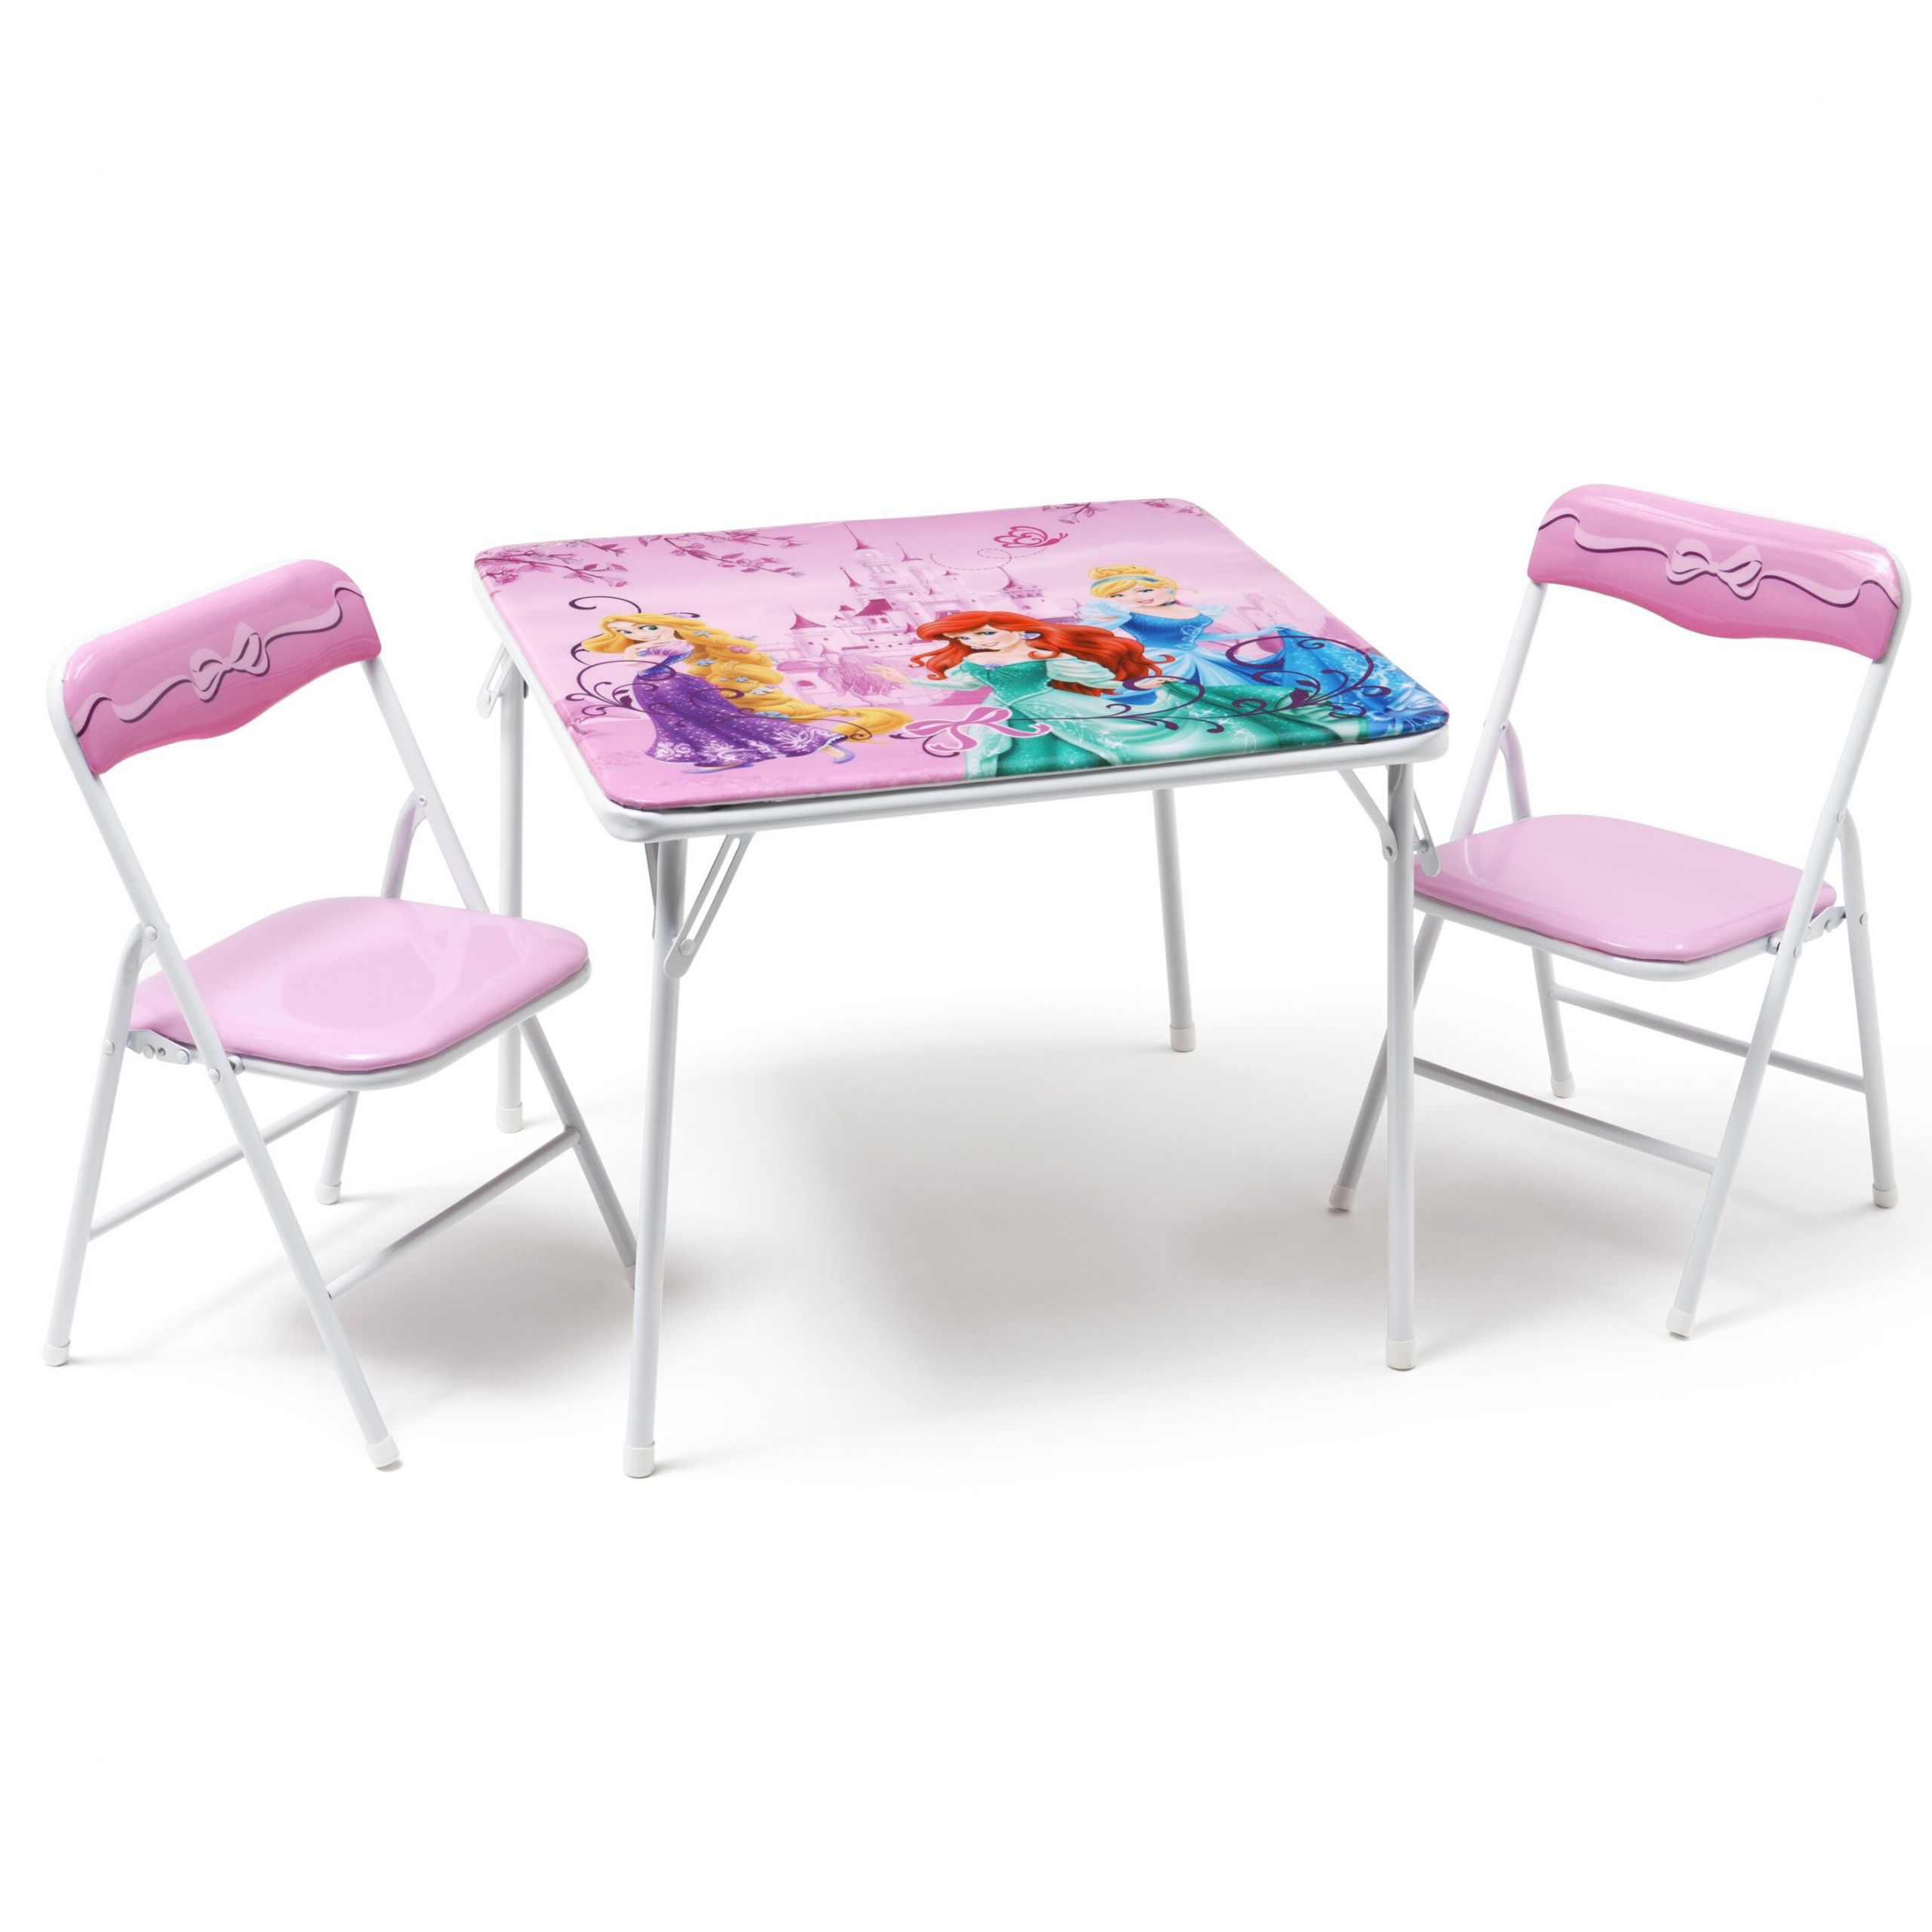 Kids Foldable Table And Chairs
 DeltaChildren Princess Folding Children 3 Piece Square